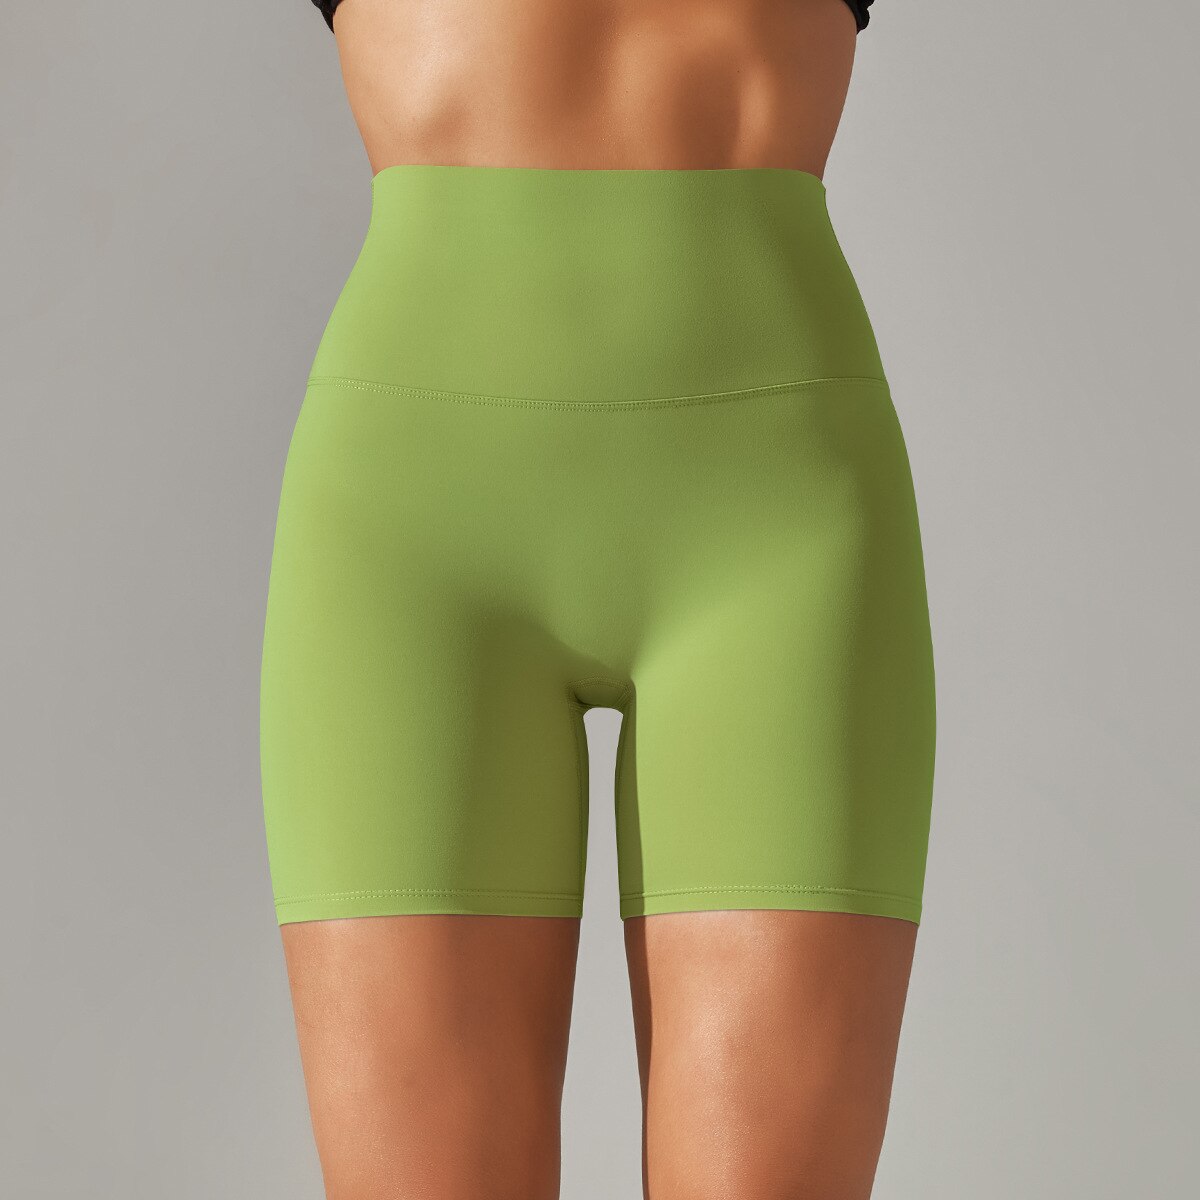 Summer Shorts Chic Gym Wear Medium Fruit Green XS